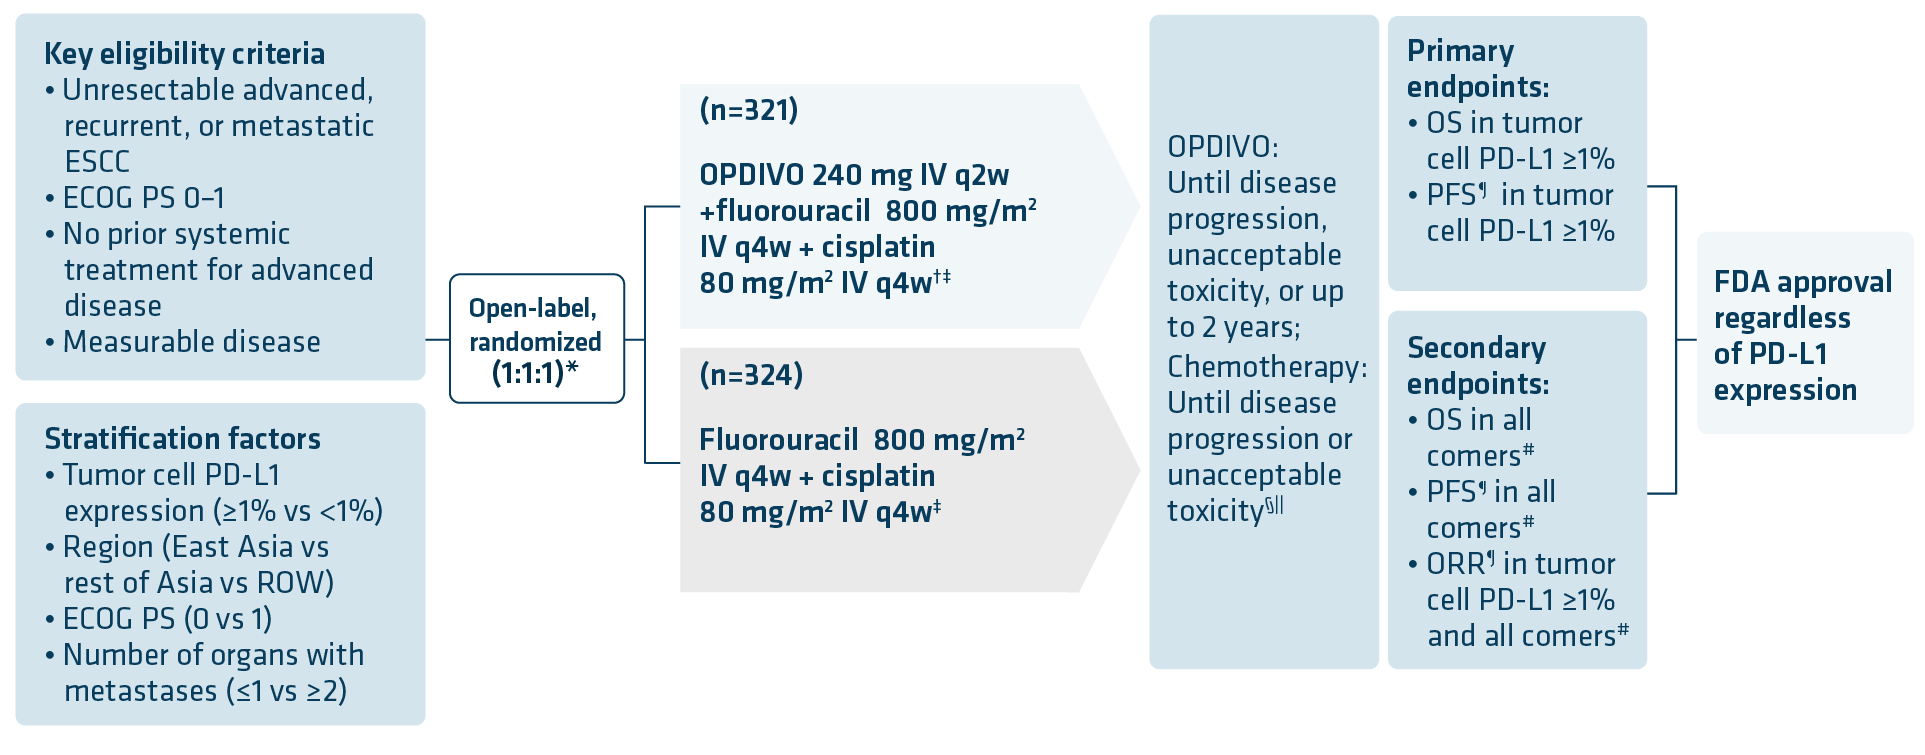 OPDIVO® (nivolumab) therapy: Checkmate 648 Study Design